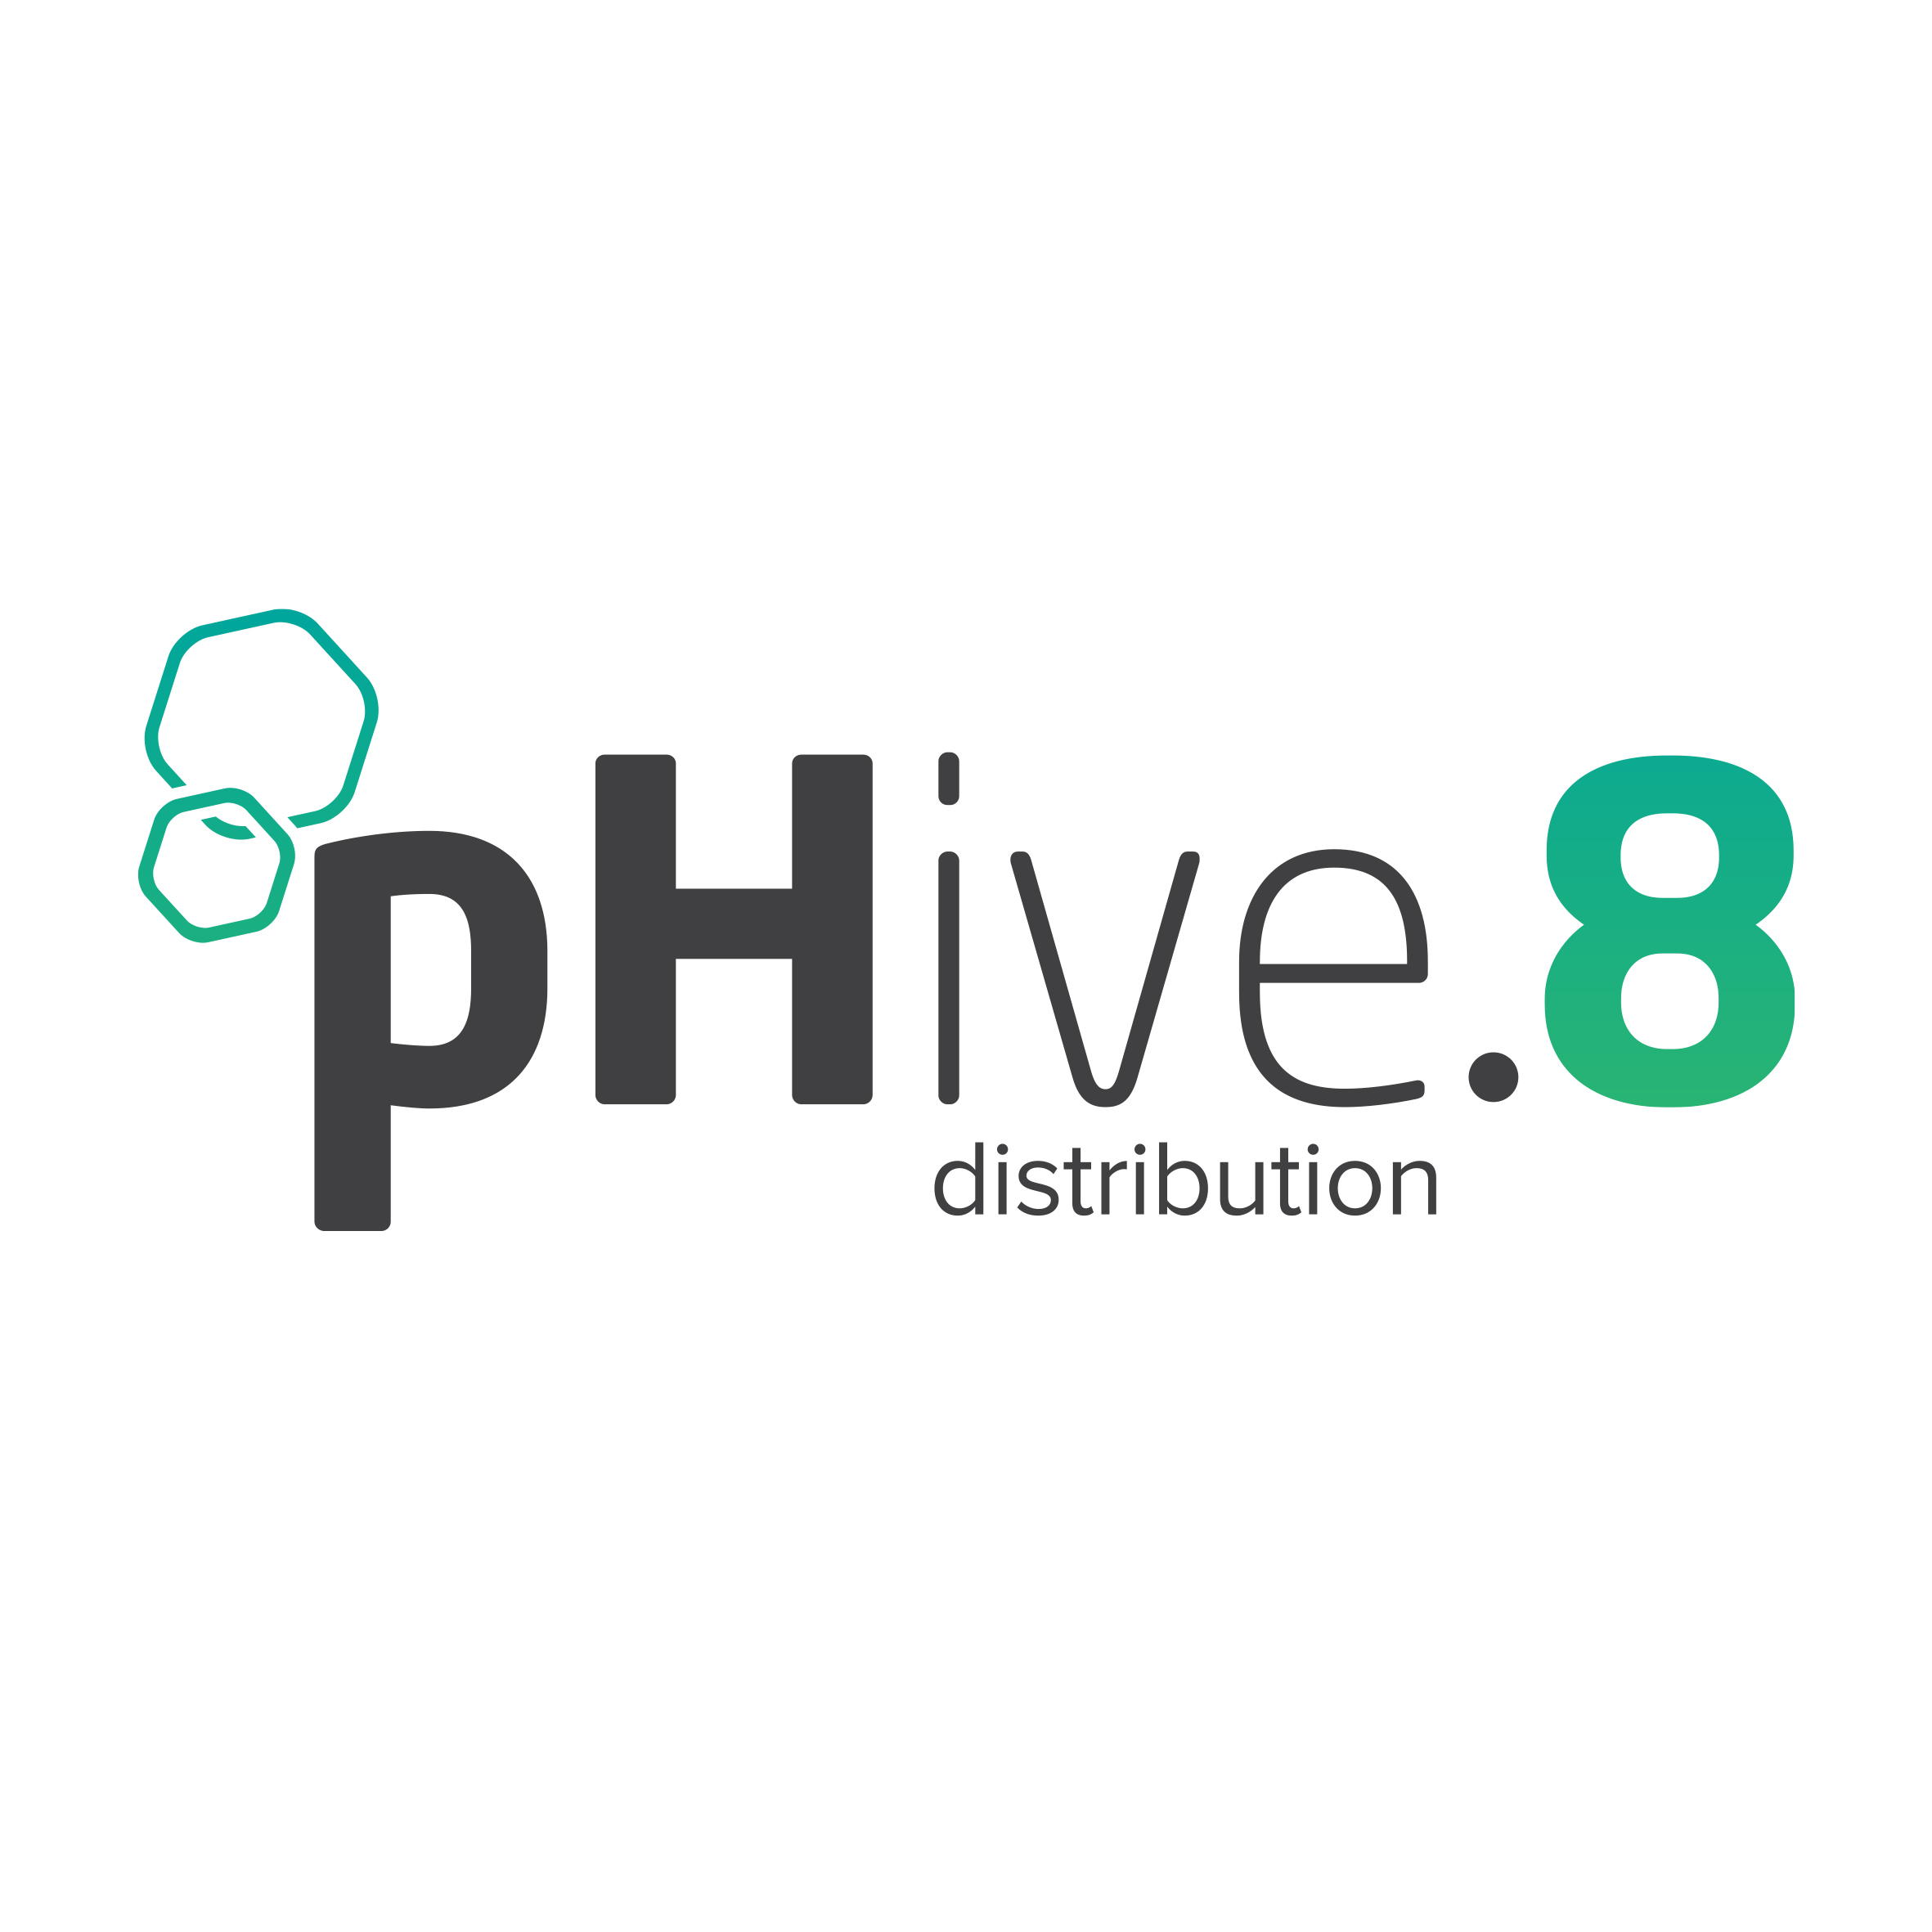 Dutch Lighting Innovations/pHive.8 Distribution